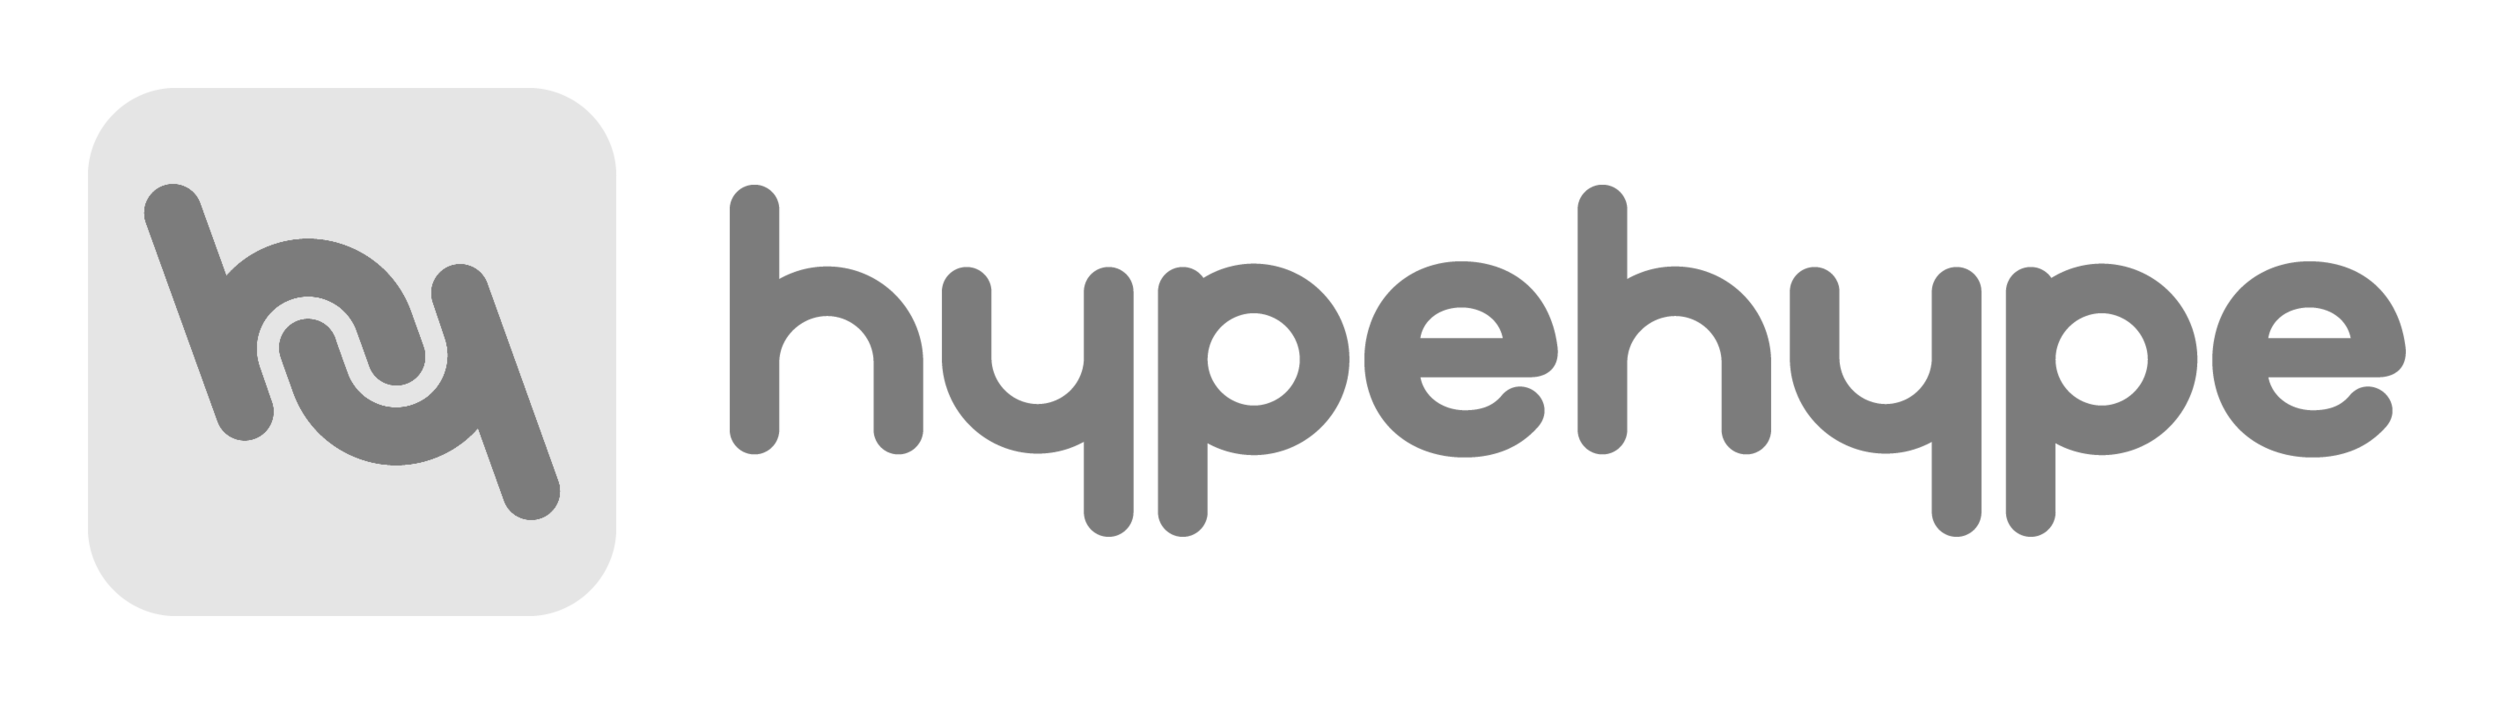 HypeHype-logo-final-Gray.png